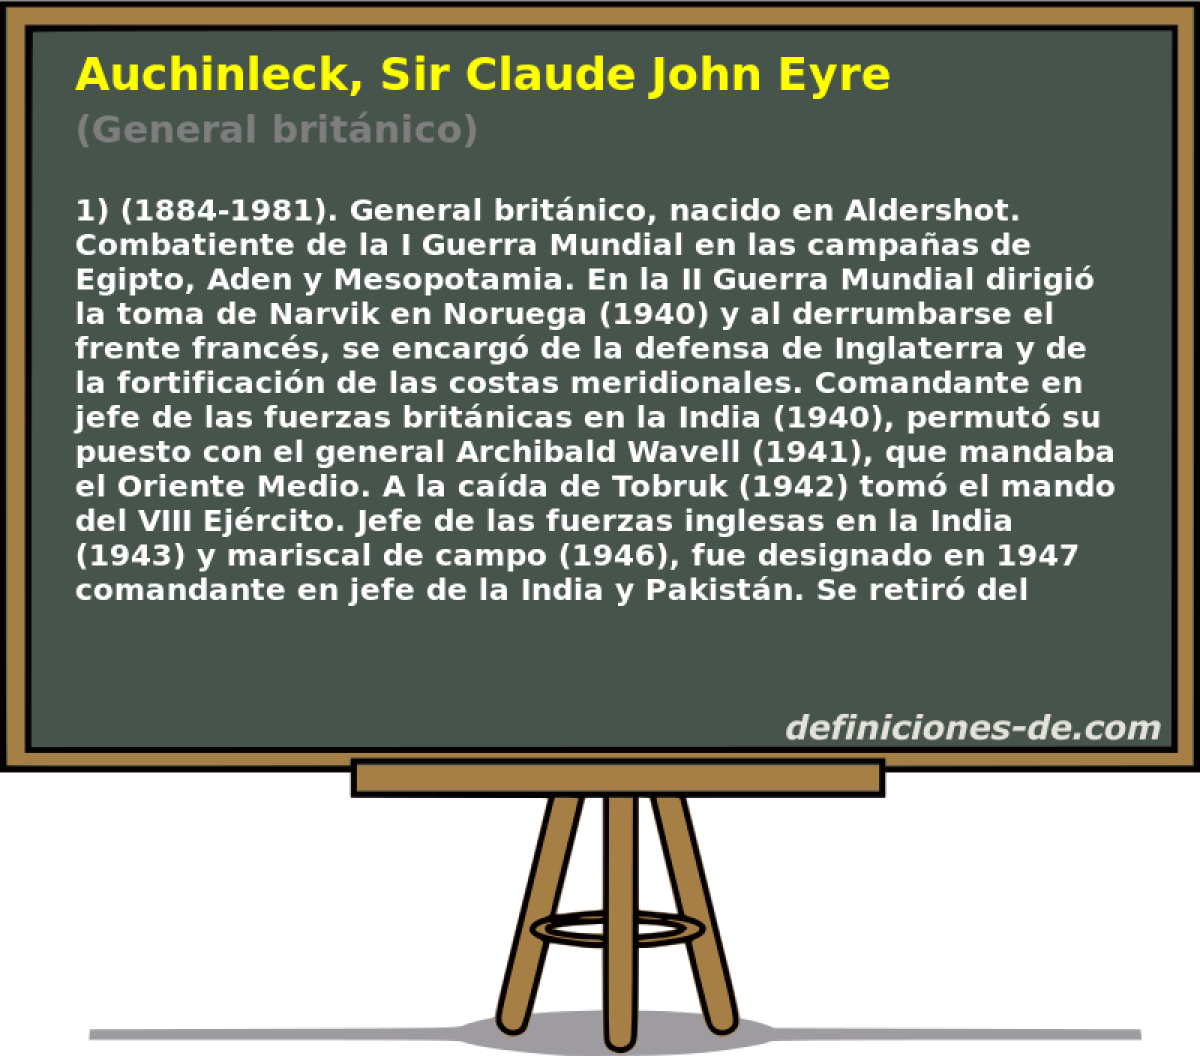 Auchinleck, Sir Claude John Eyre (General britnico)